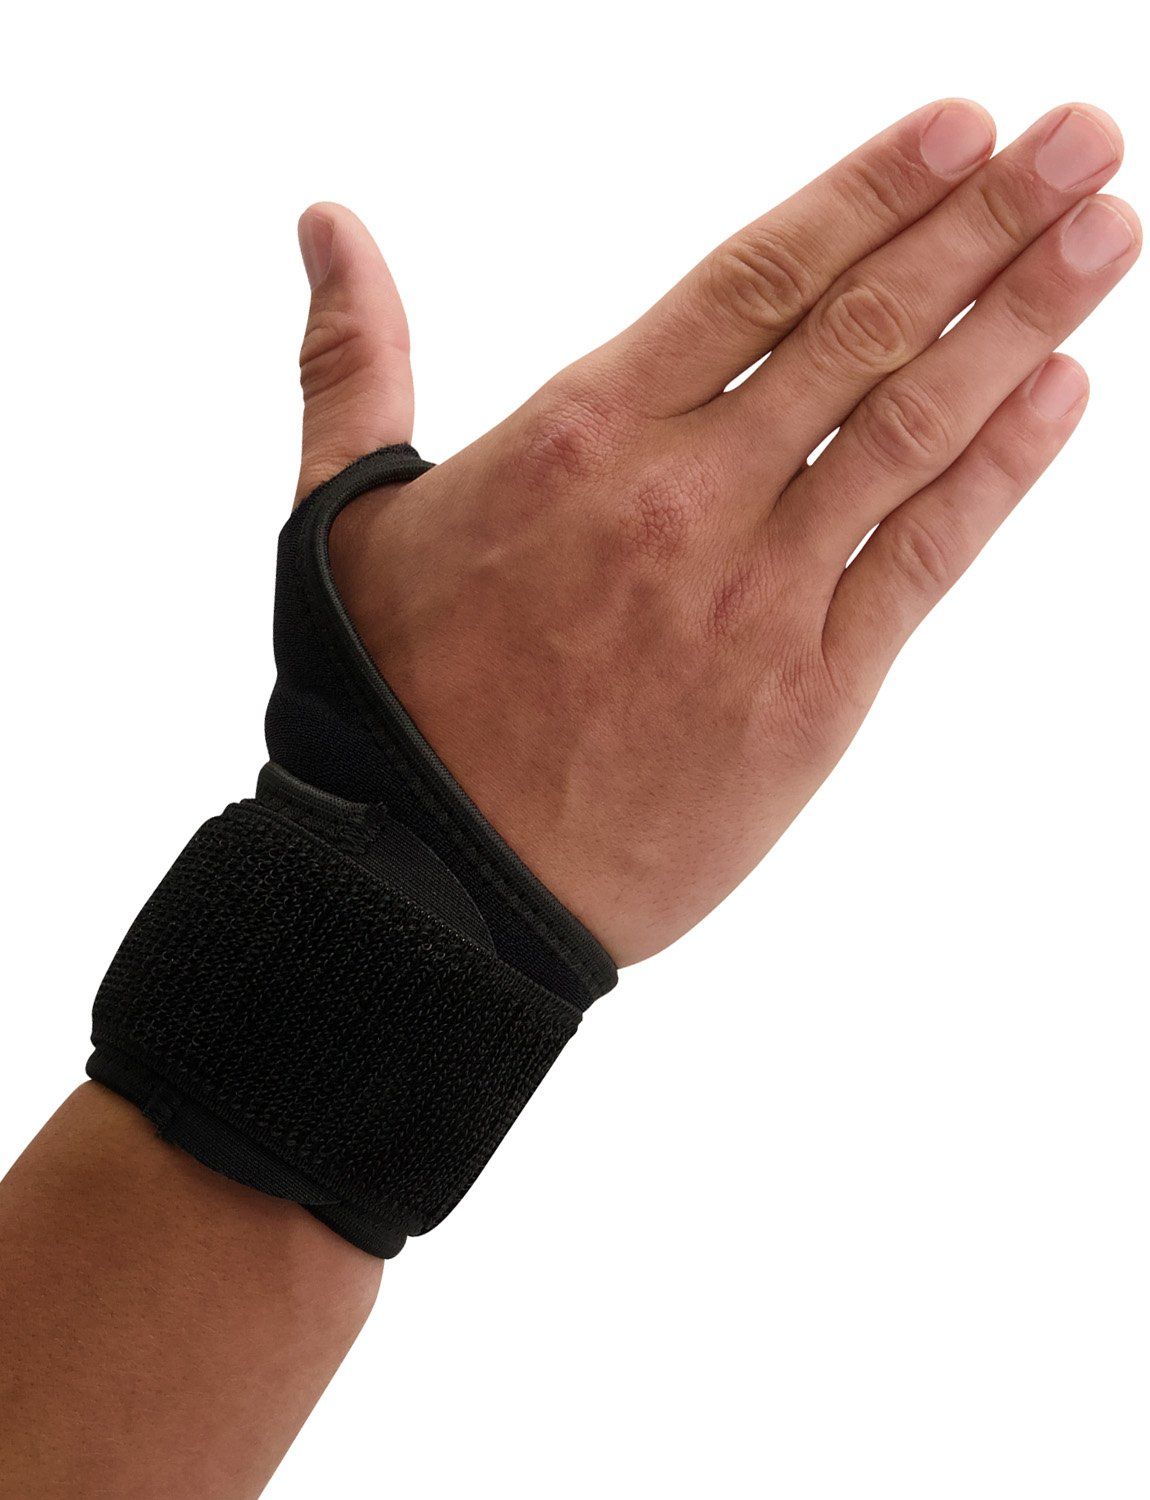 medidu wrist support for sale